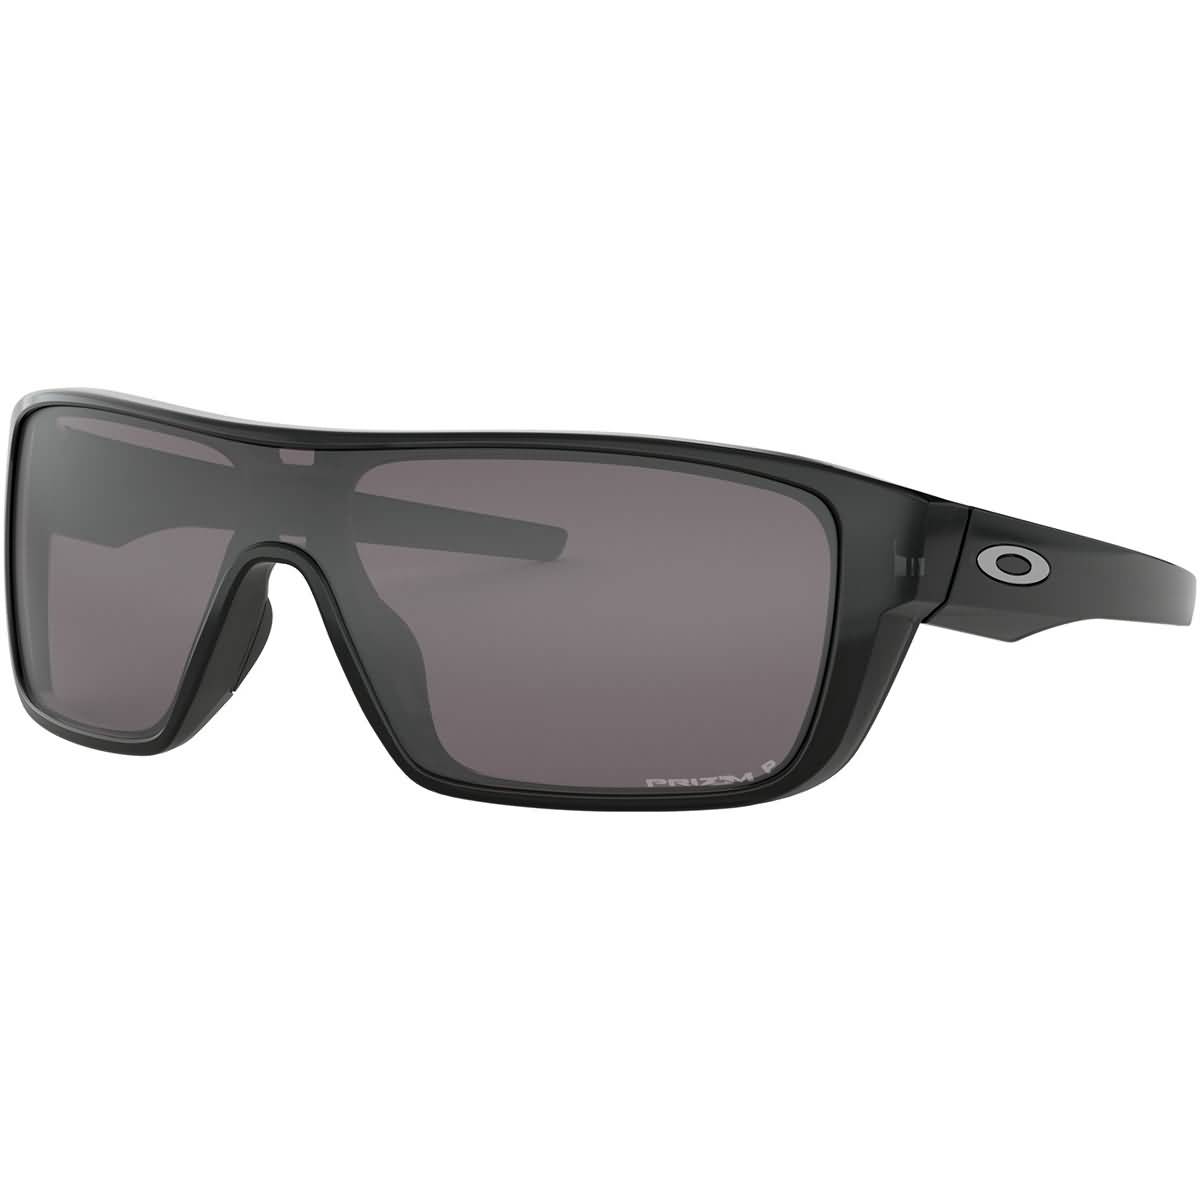 Polarized Wrap Around Fashion Sunglasses Black Frame Black Lenses for Men and Women, Size: One Size